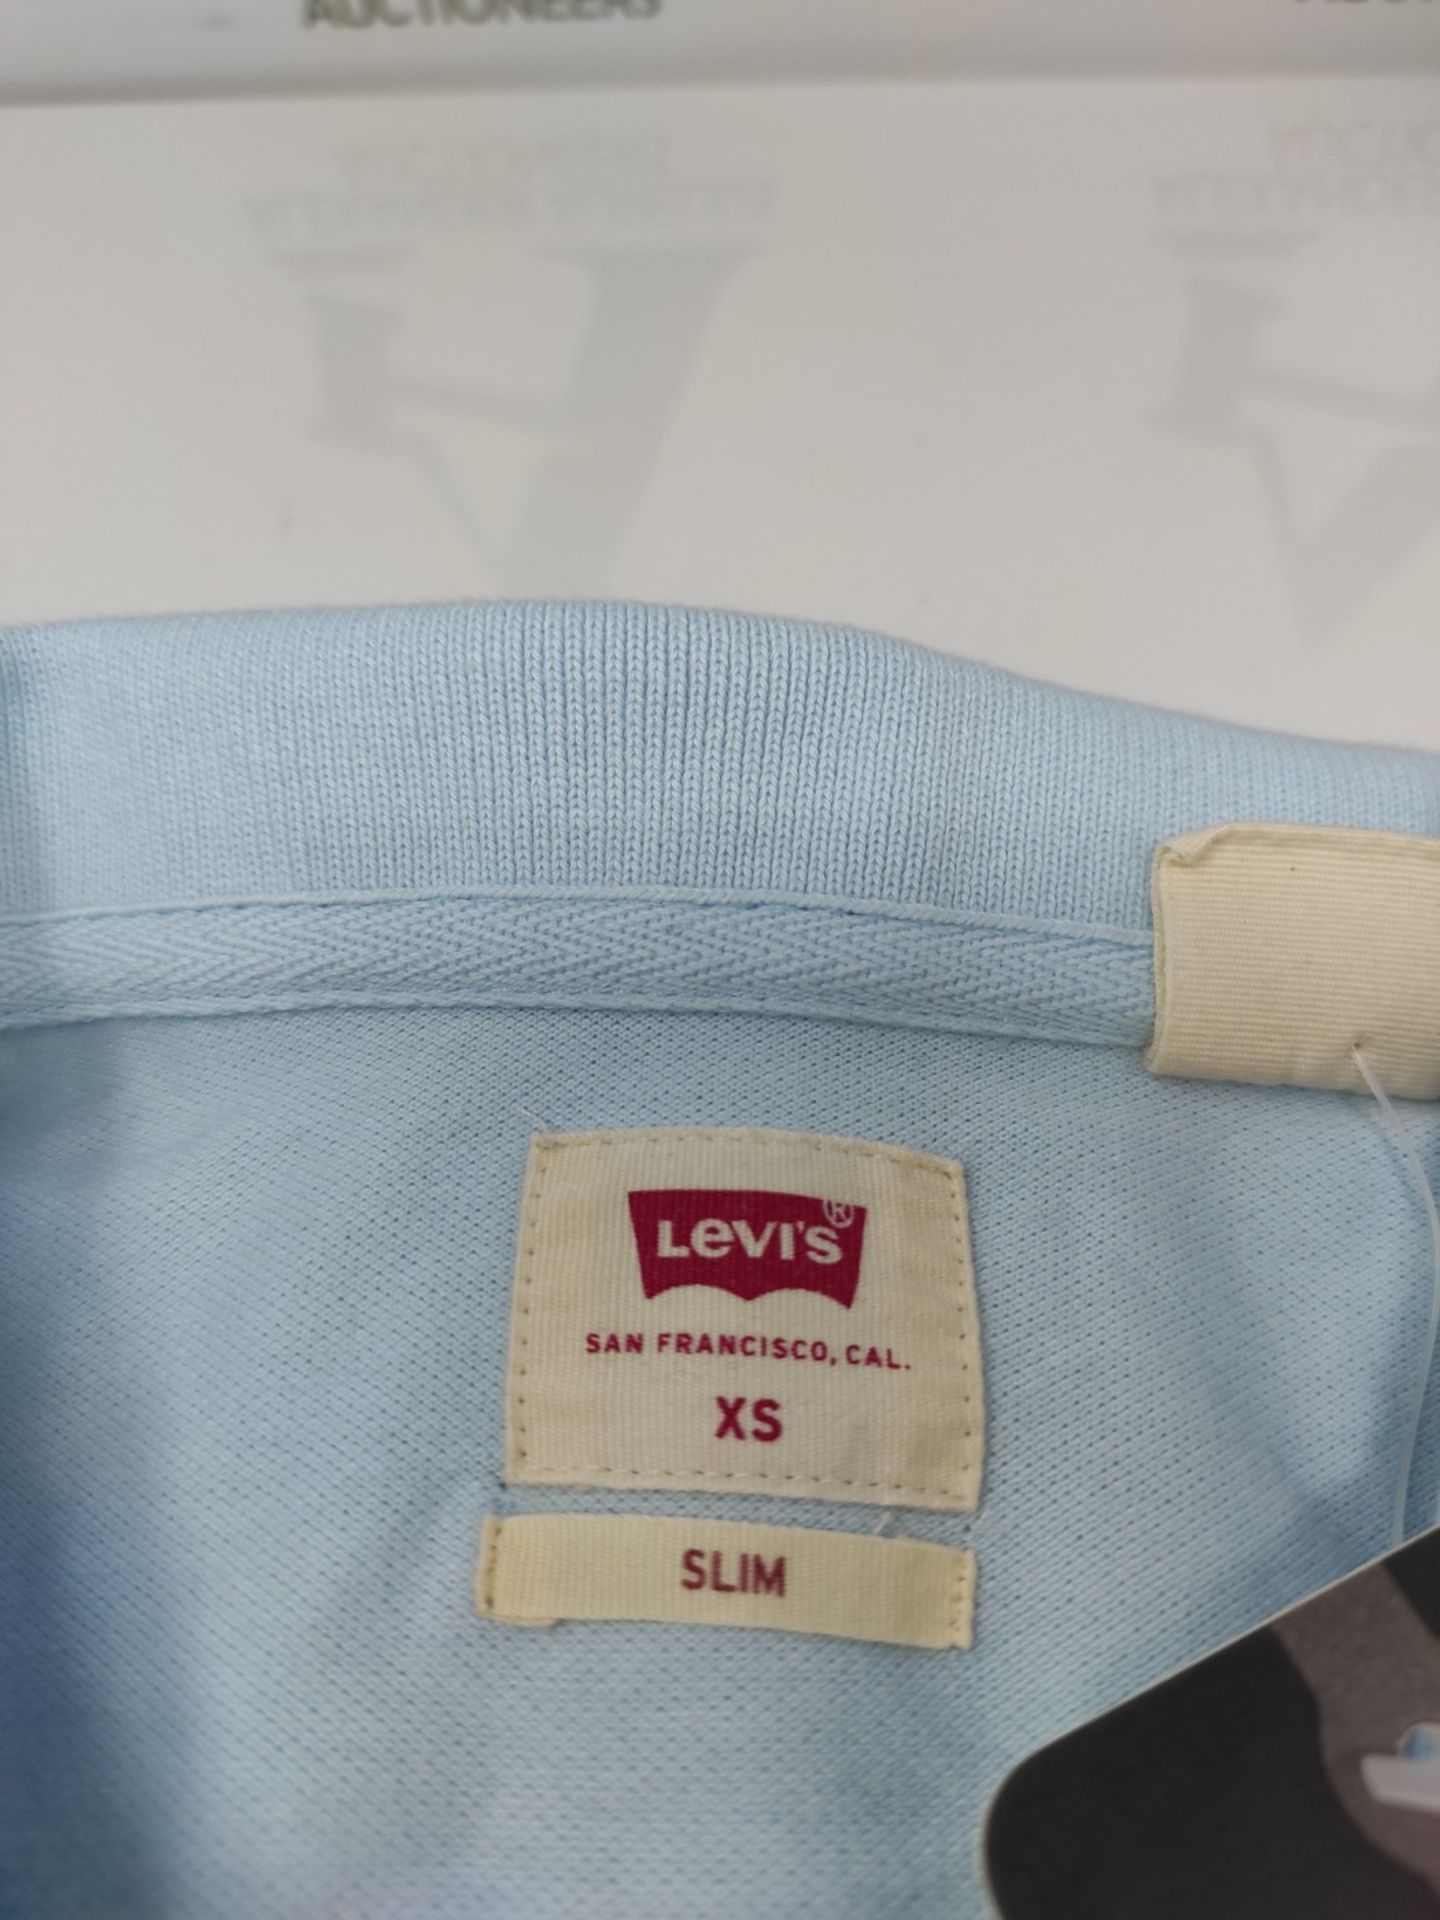 Levi's Men's Slim Housemark Polo Shirt, Omphalodes, XS - Image 3 of 3